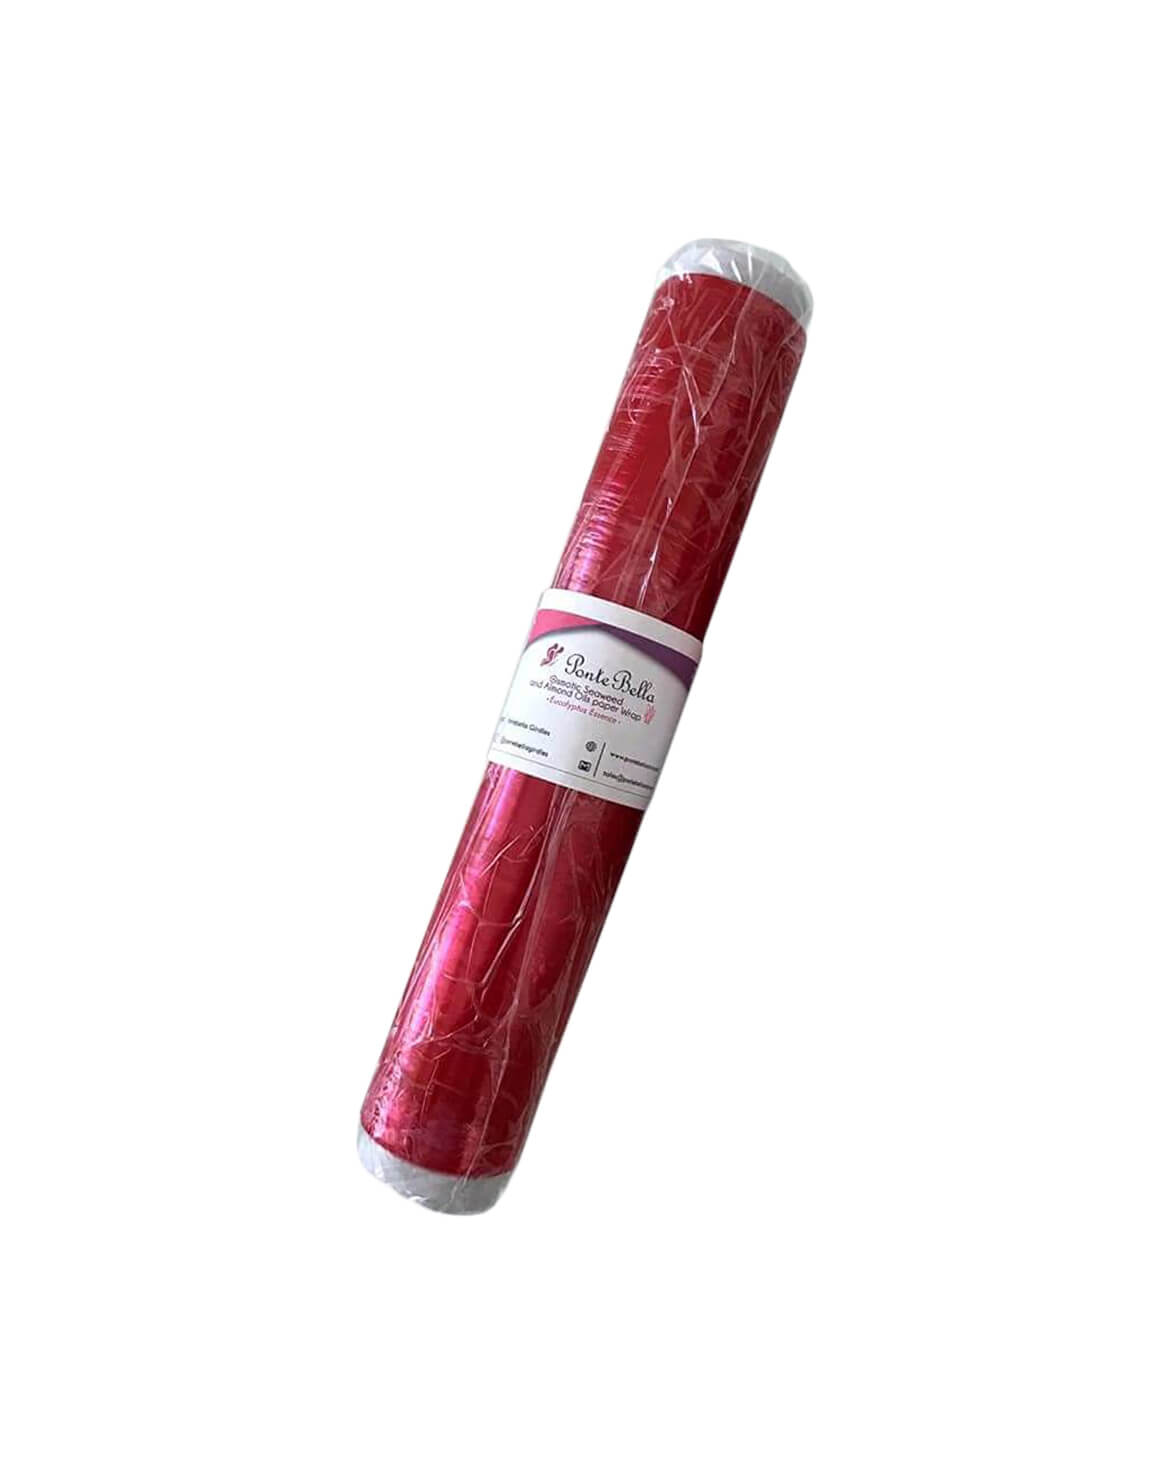 Osmowrap osmotic wrap Red 100meters PonteBella